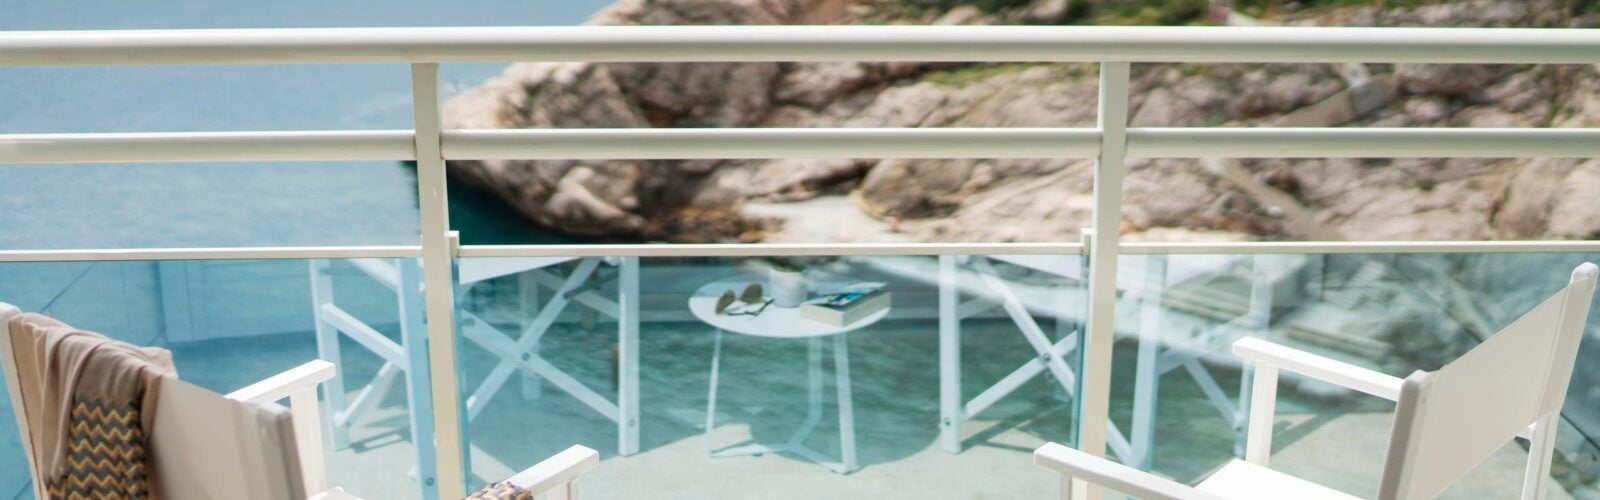 Balcony view with two chairs overlooking the ocean in Croatia Hotel Bellevue Dubrovnik